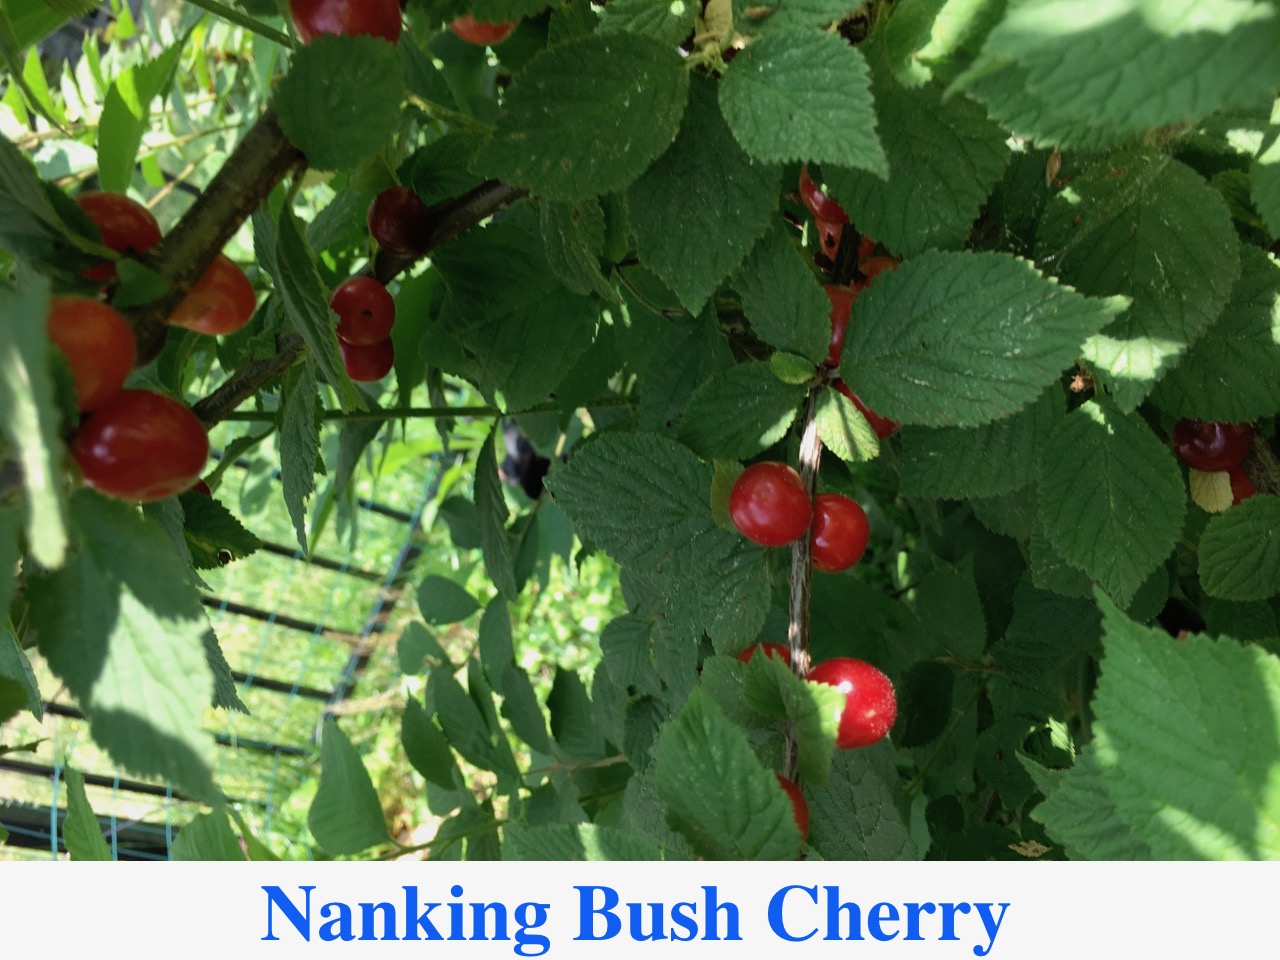 Red Nanking Bush Cherry